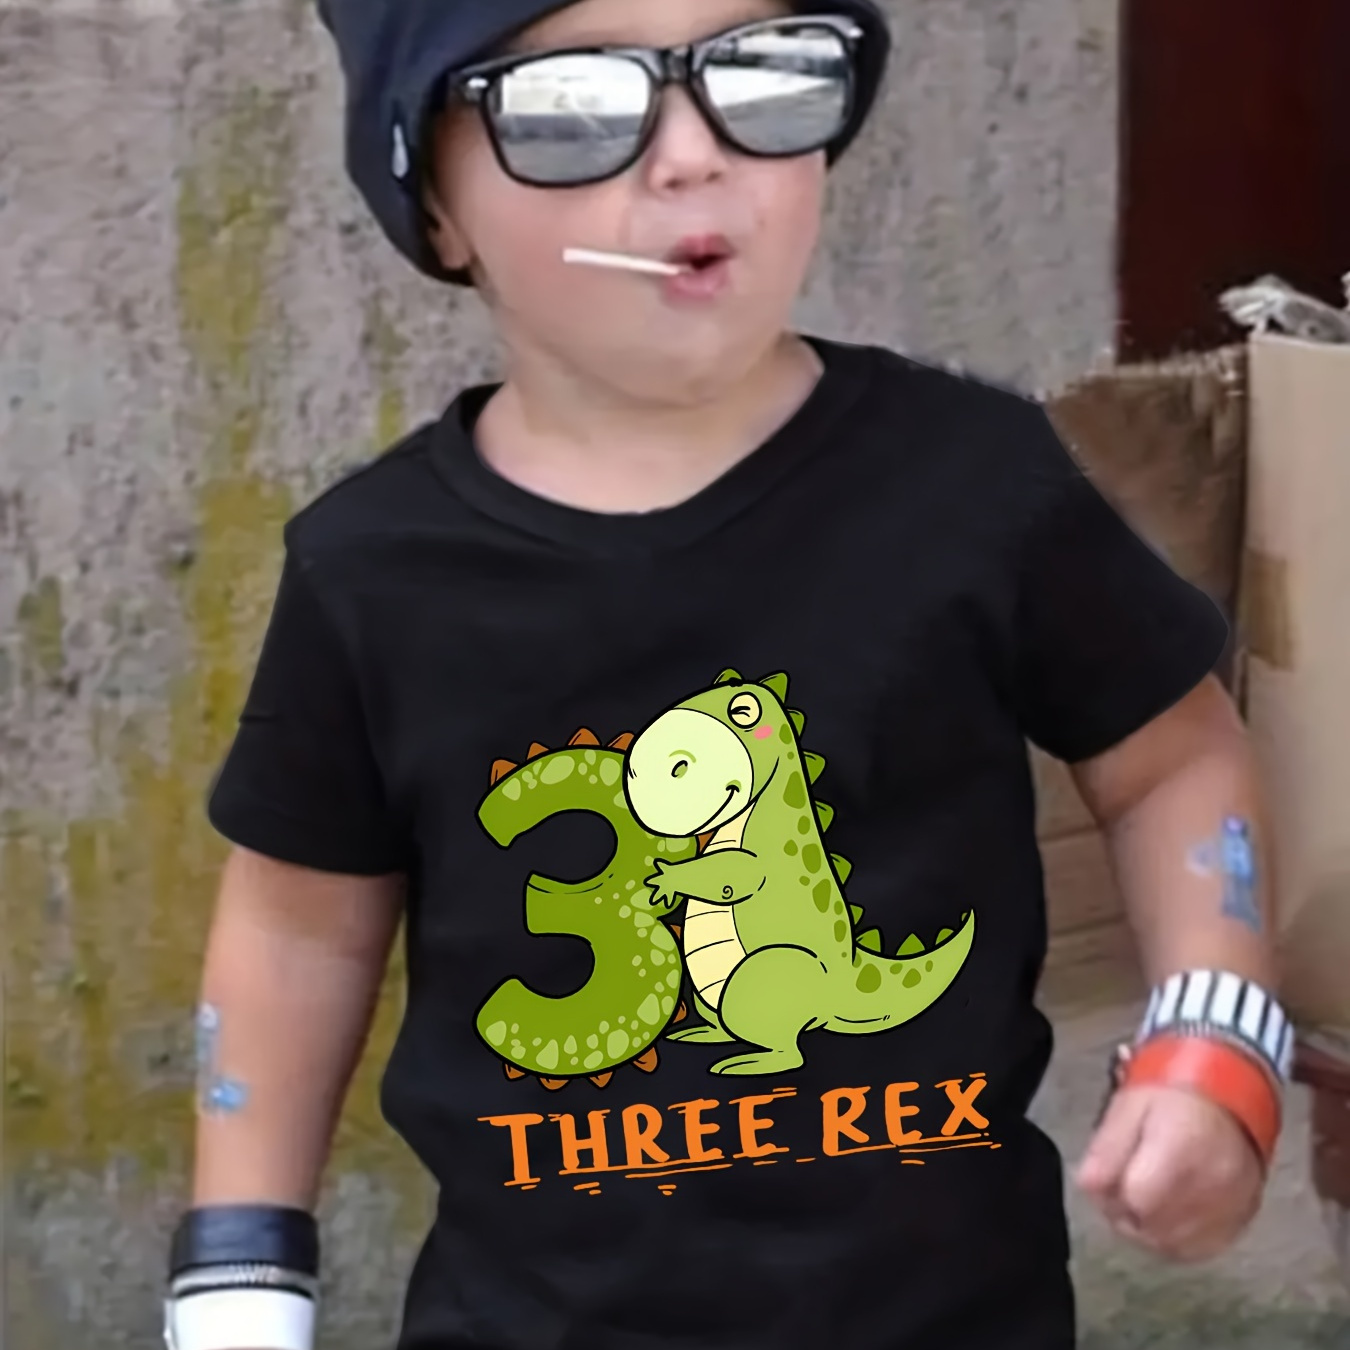 

Casual Comfy Boy's Summer Top - 3 Rex Cartoon Dinosaur Print Short Sleeve Crew Neck T-shirt - Creative Tee Birthday Gift